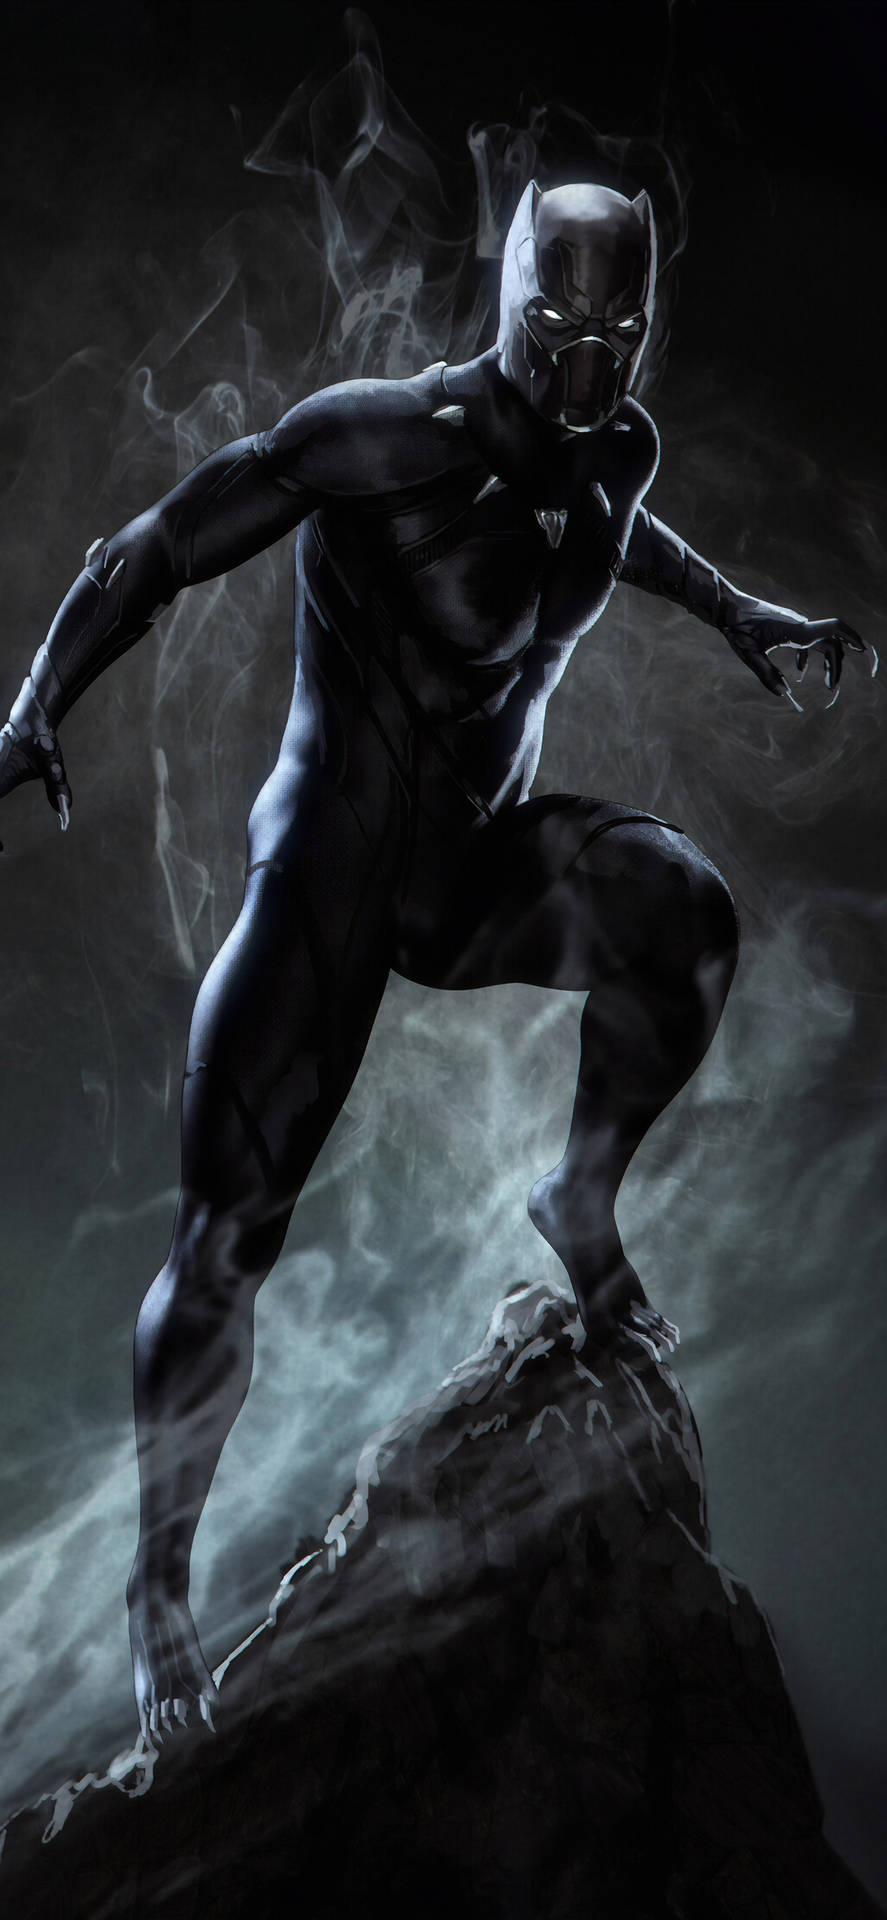 Black Panther On Rock Superhero Iphone Background